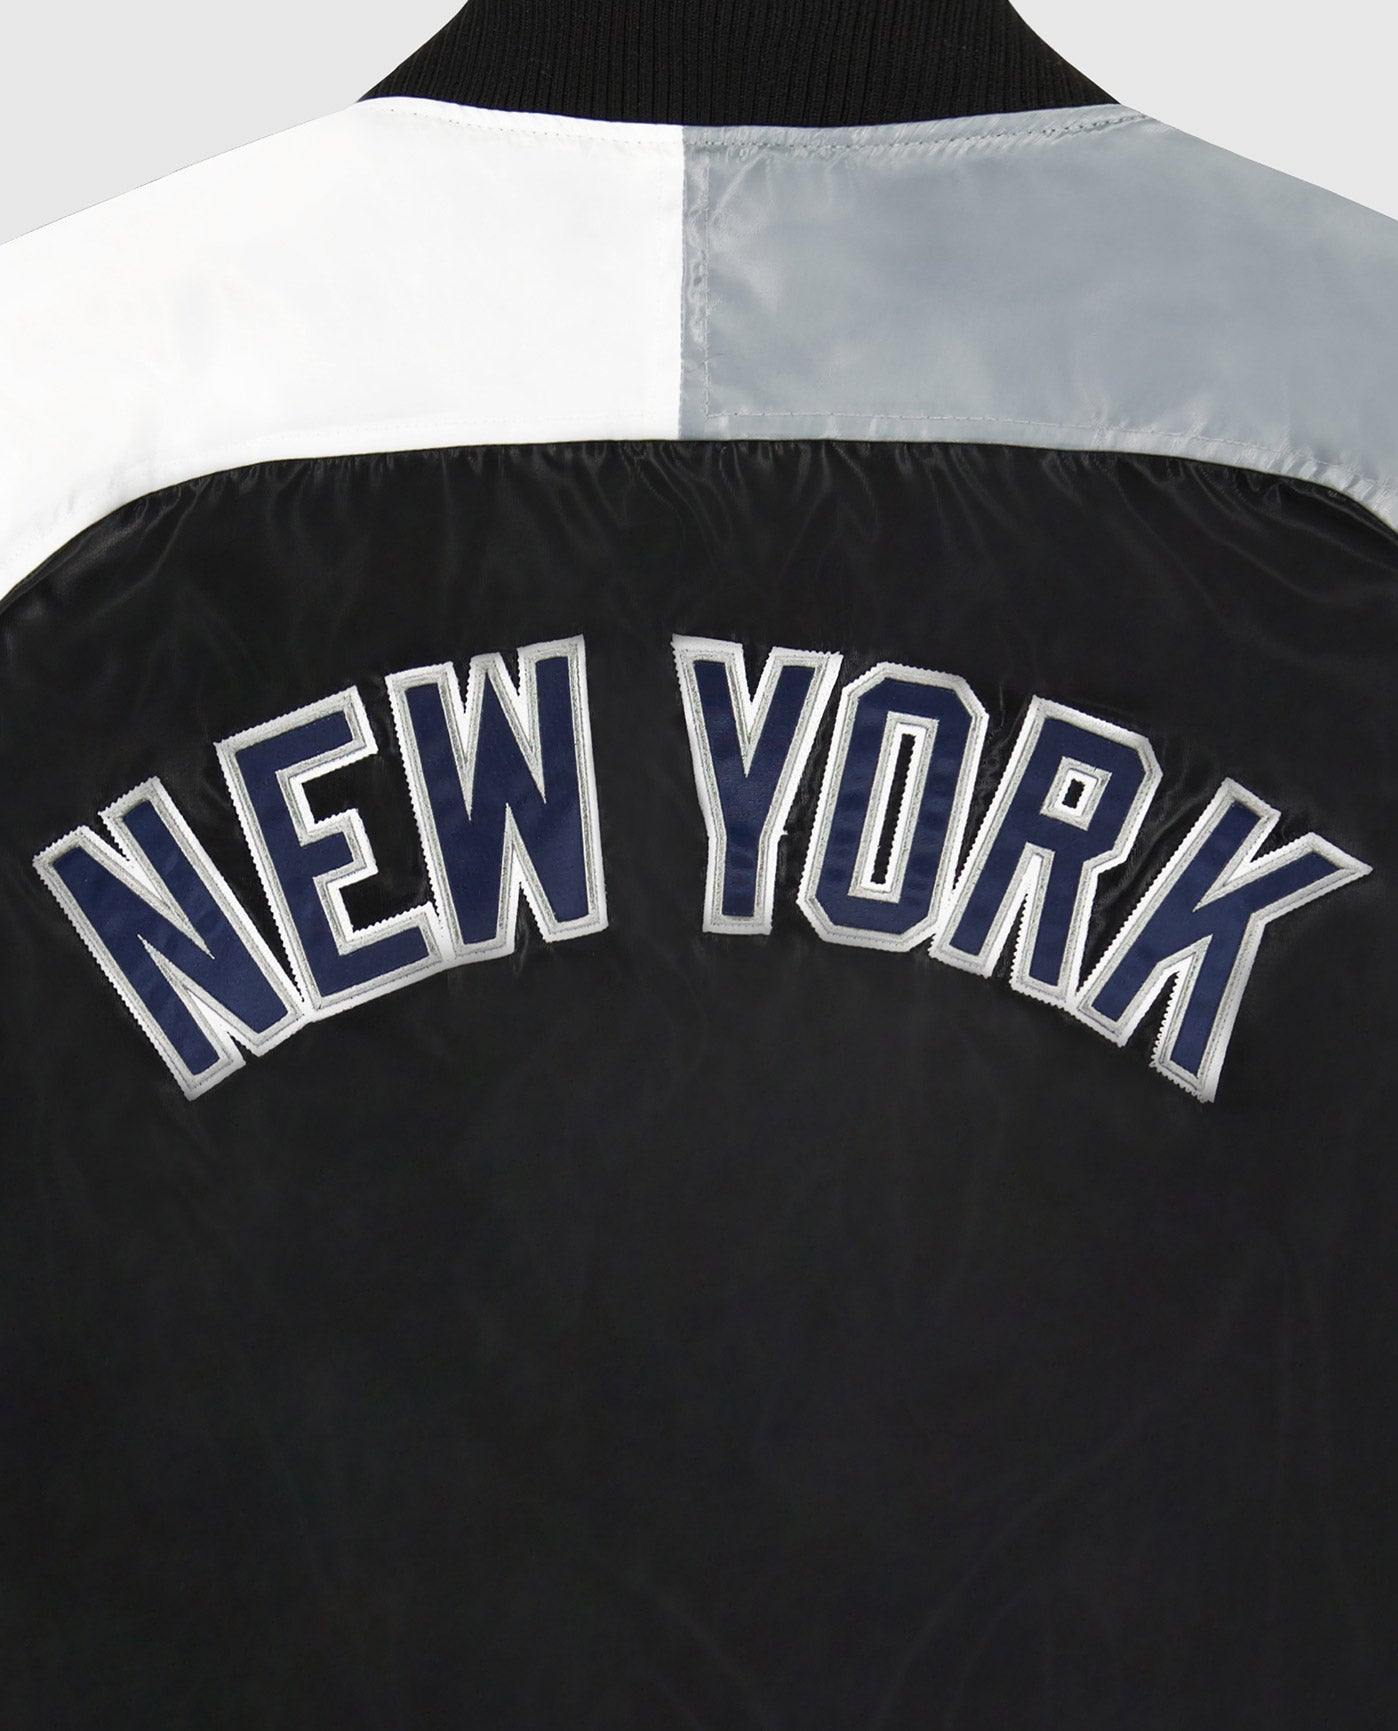 Men's Starter Purple New York Yankees Cross Bronx Fashion Satin Full-Snap Varsity Jacket